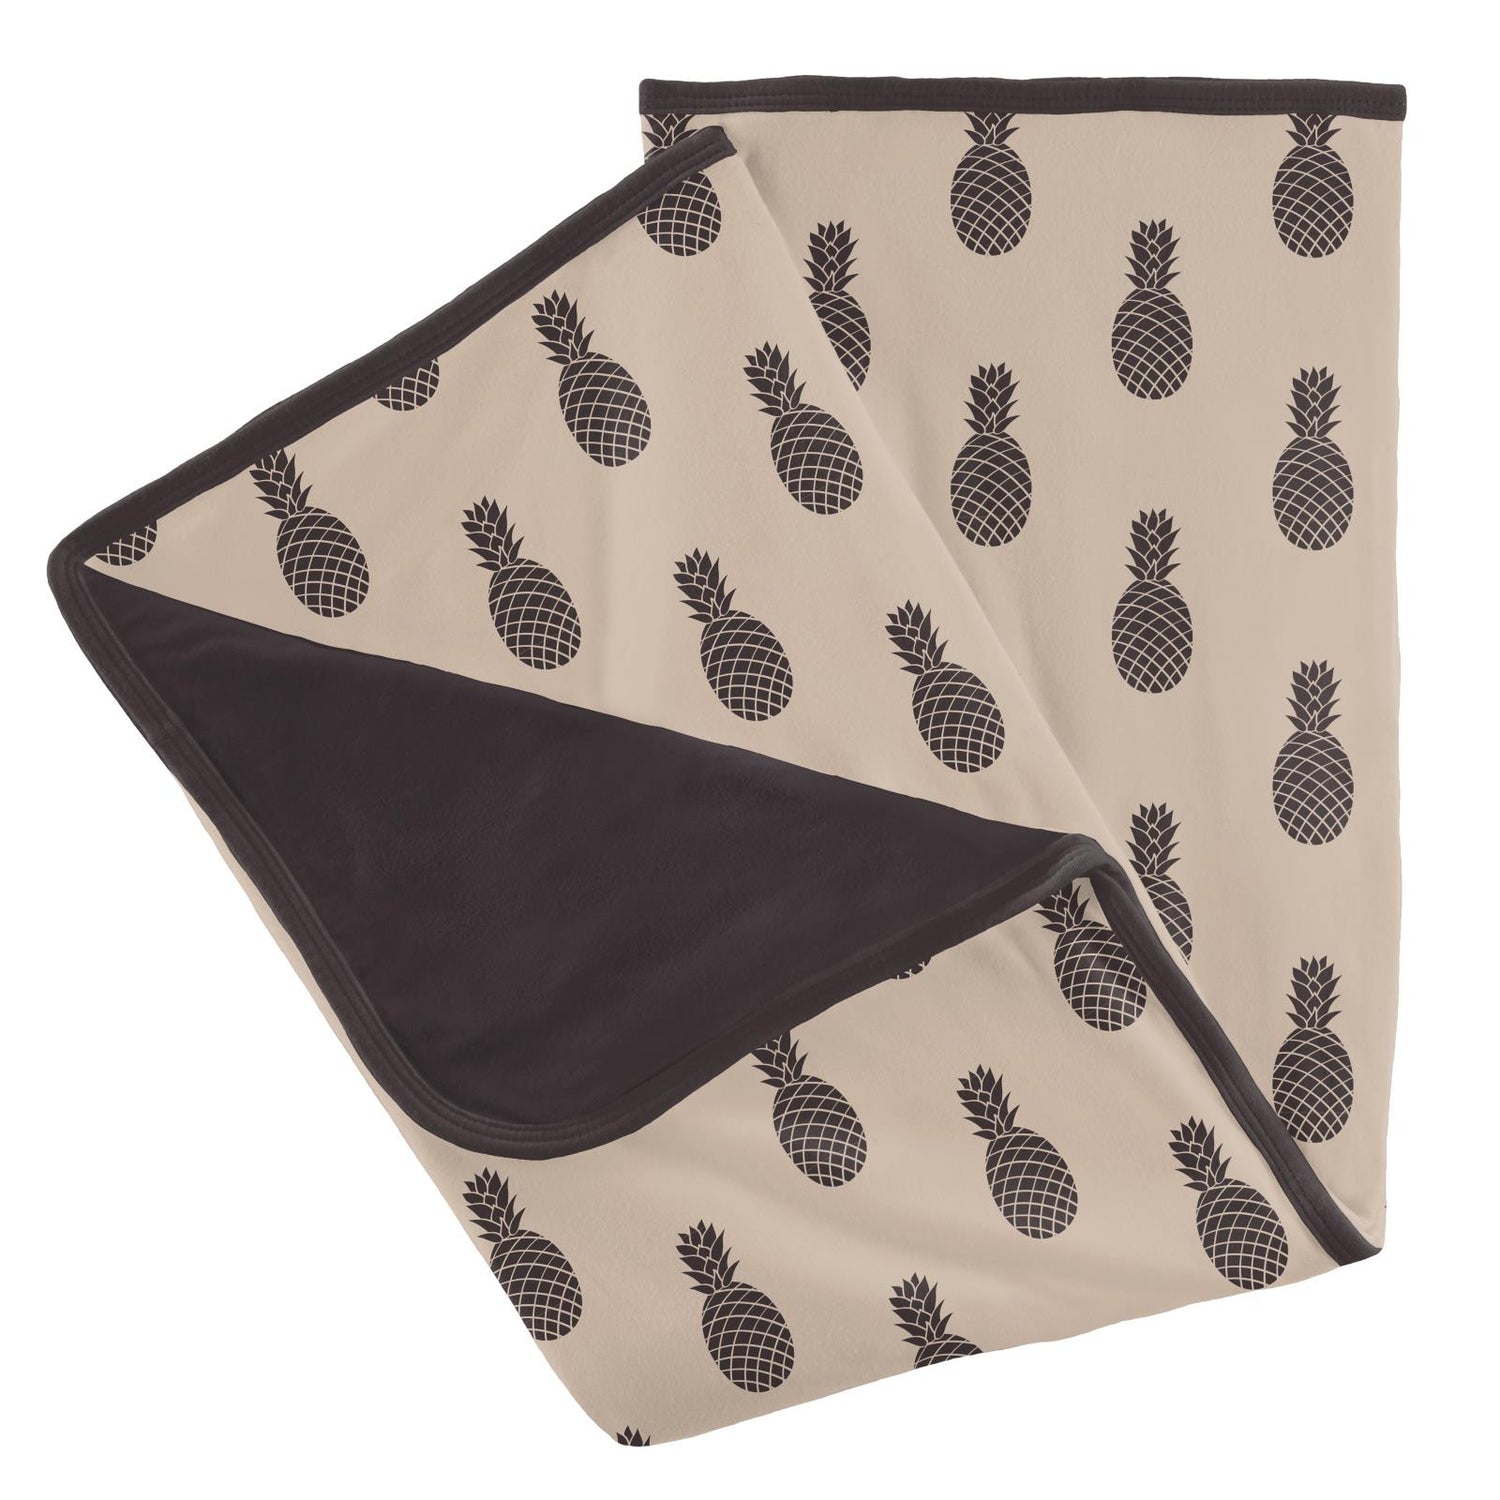 Print Stroller Blanket in Burlap Pineapples